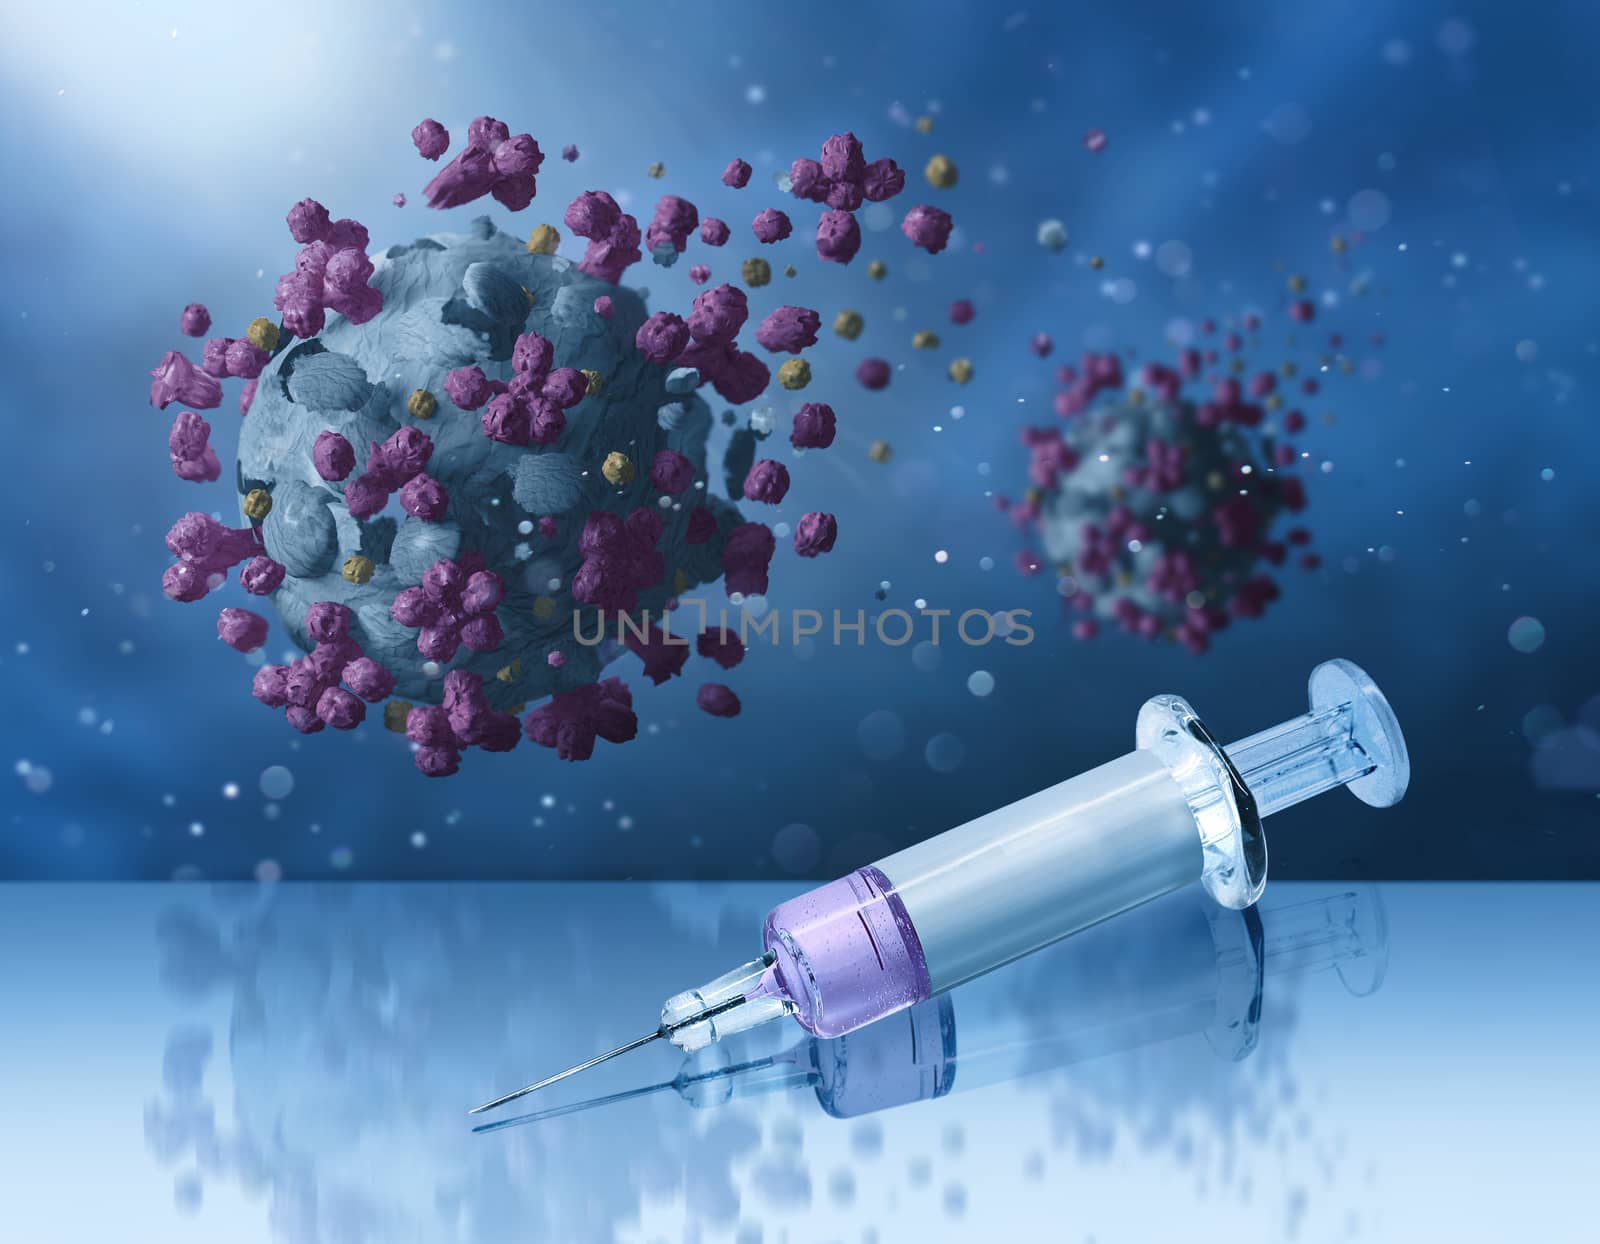 Corona viruses falling to pieces vaccine needle antidote by anterovium